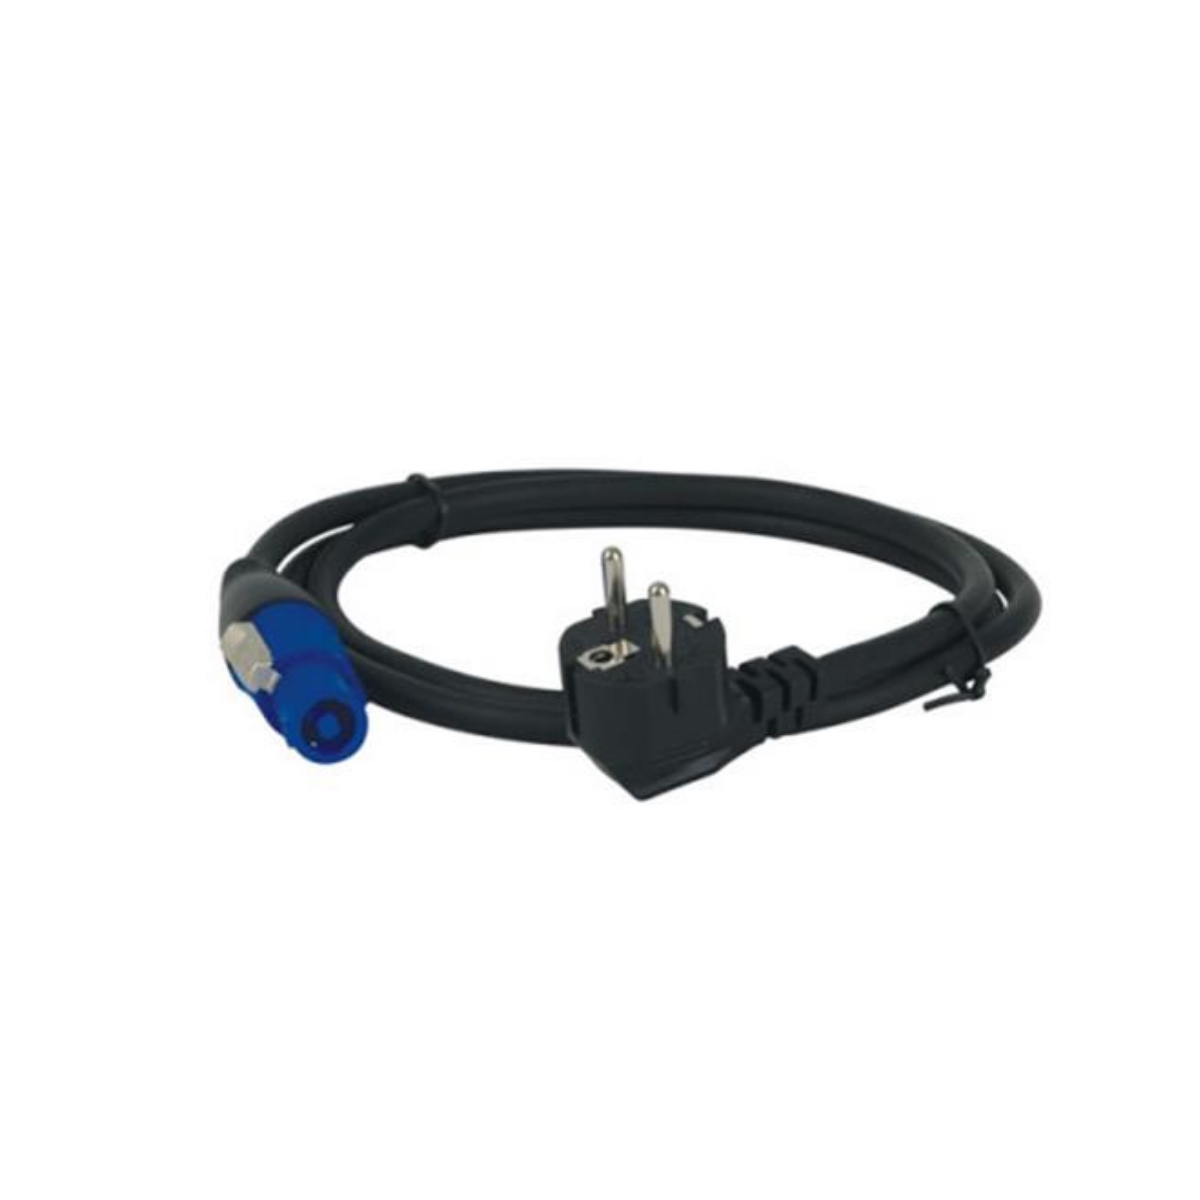 DAP Audio Powercon Netzkabel 6m 3x2,5mm², Schukostecker Winkel - Powercon NAC3FCA (blau)